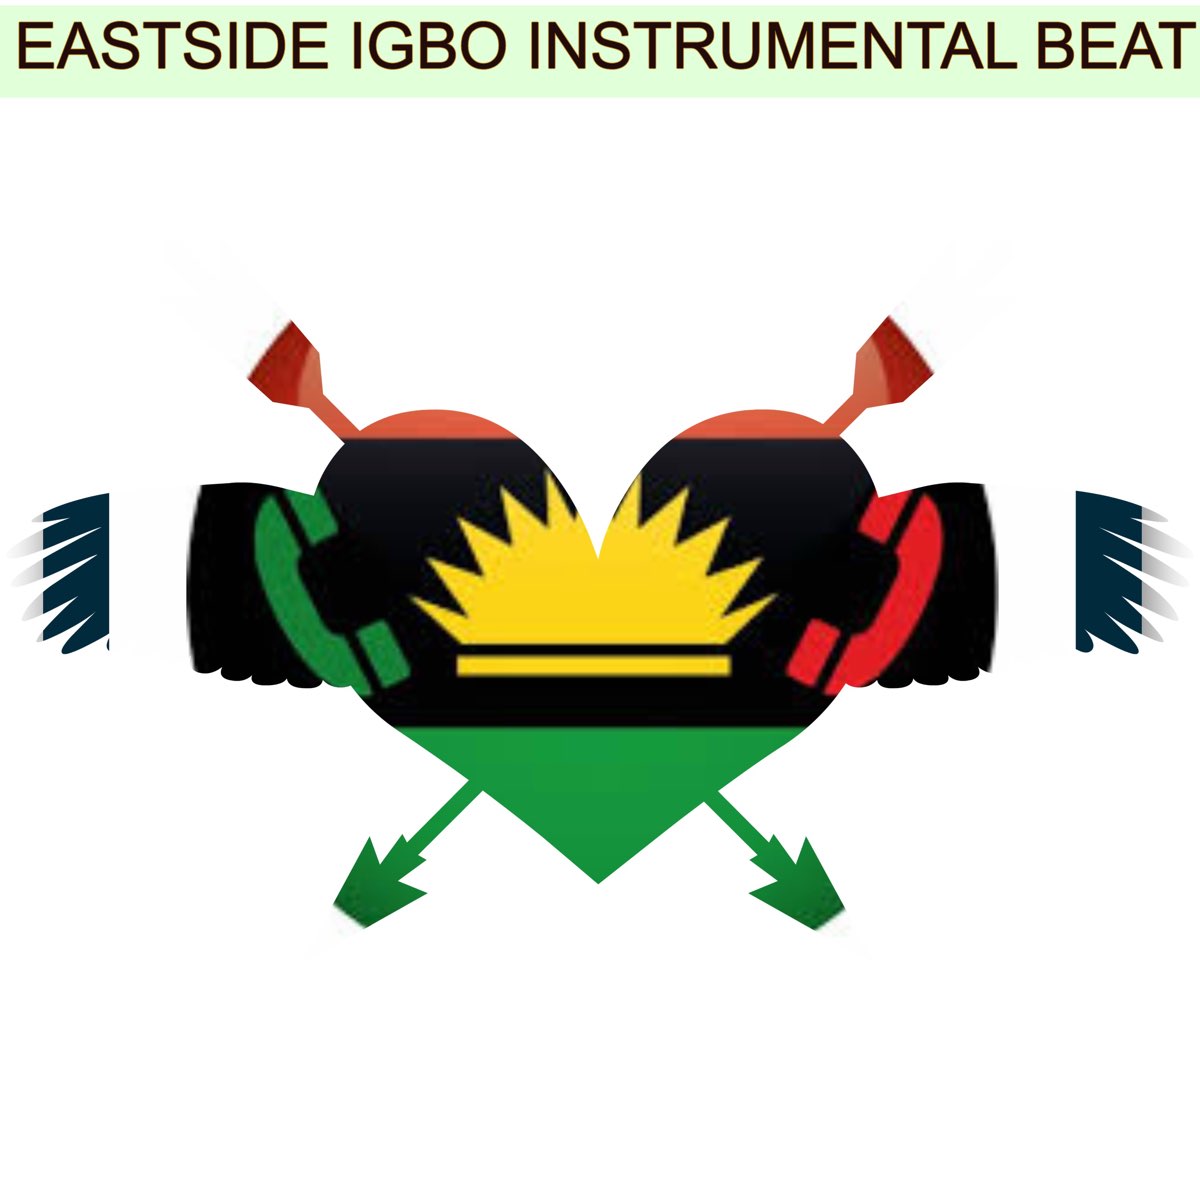 Eastside Igbo Instrumental Beat by Mic Moss on Apple Music